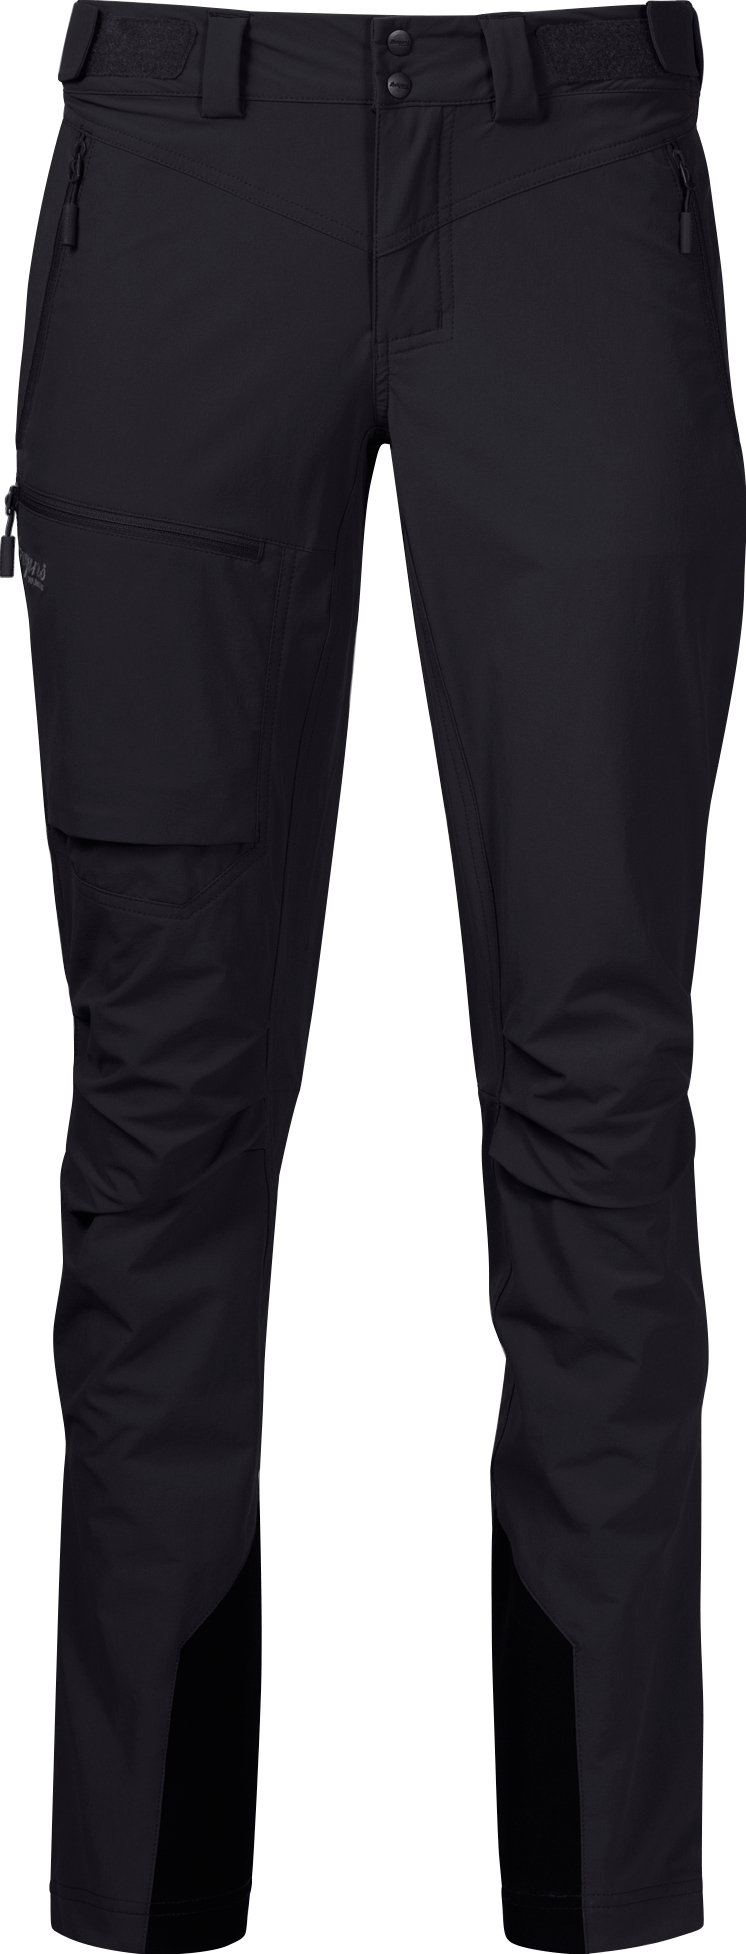 Bergans Bergans Women's Breheimen Softshell Pants Black/Solid Charcoal M, Black/Solid Charcoal